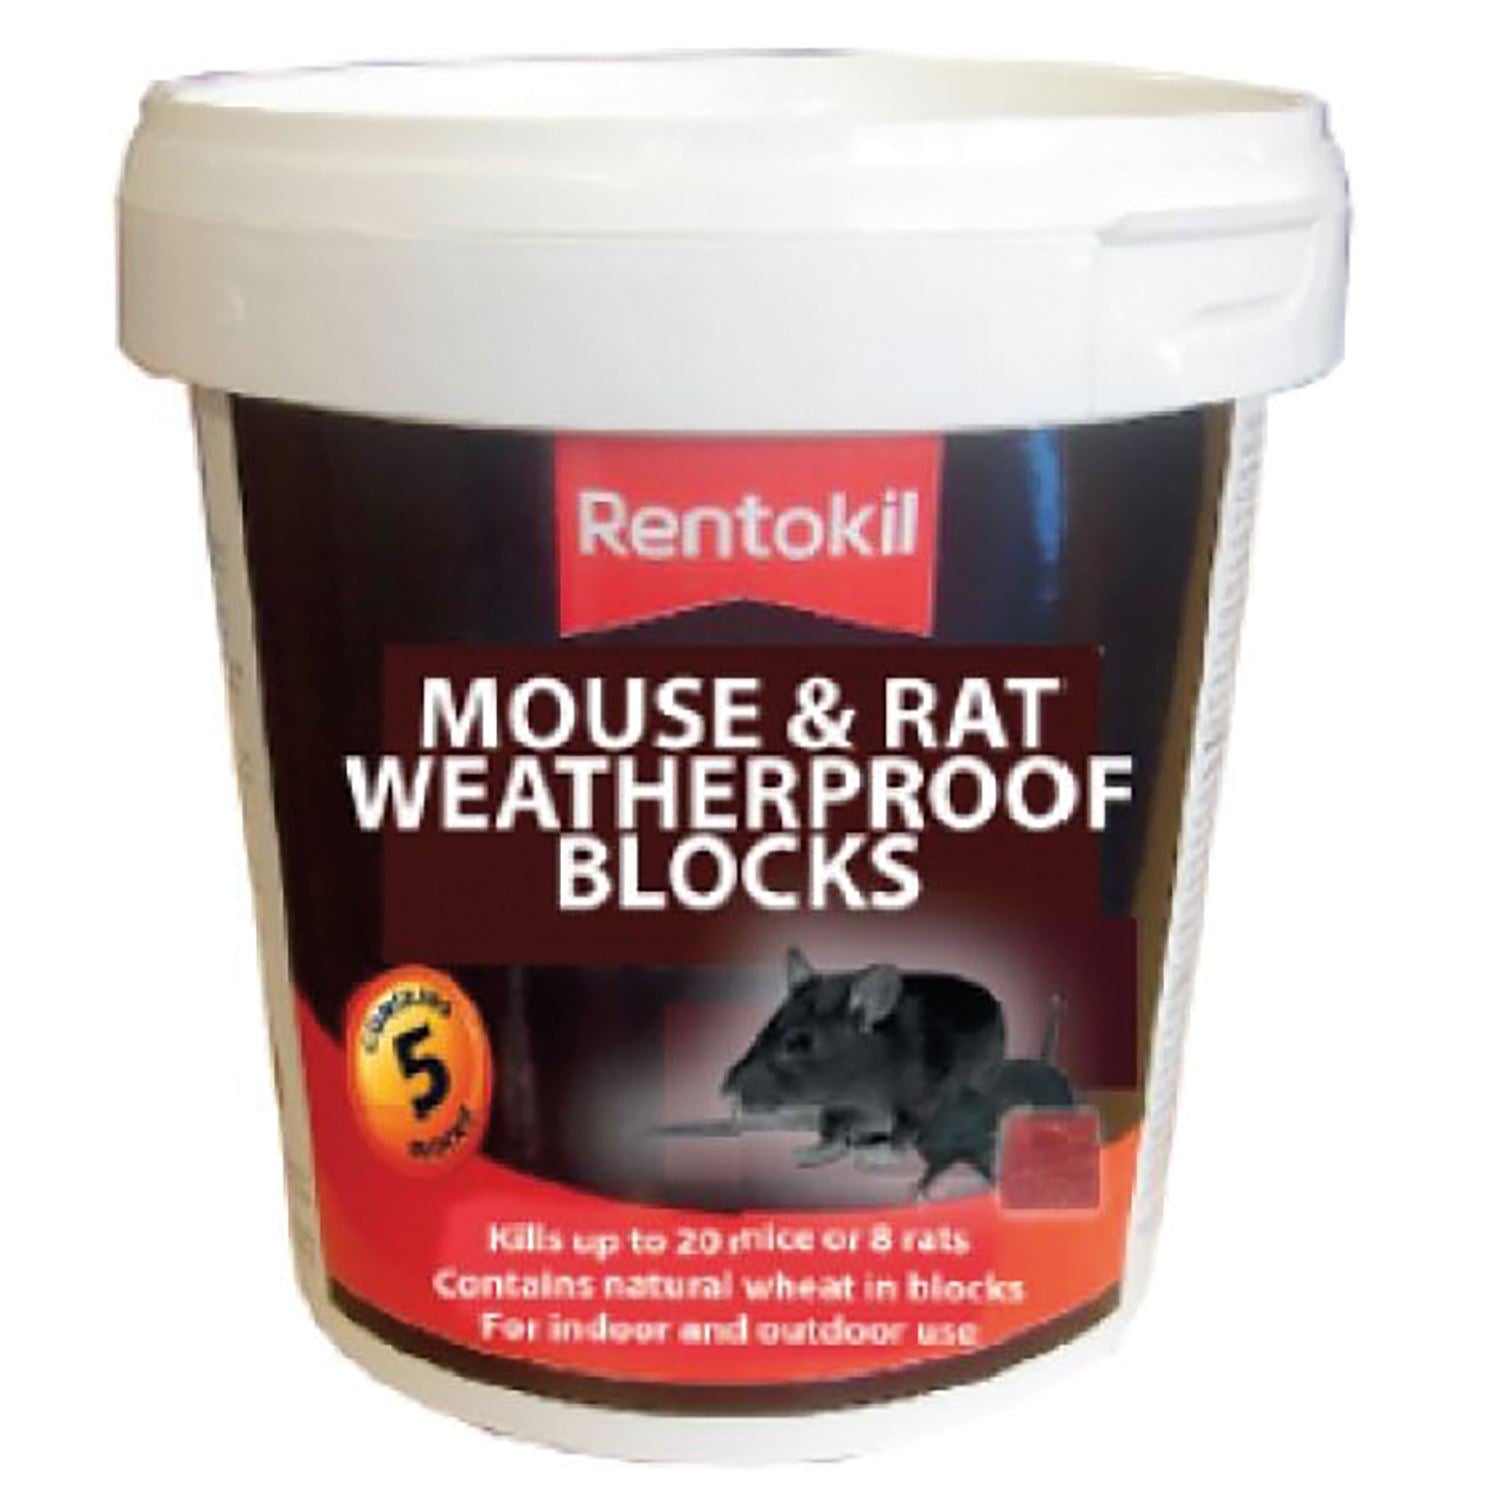 Rentokil Mouse & Rat Weatherproof Blocks - Just Horse Riders